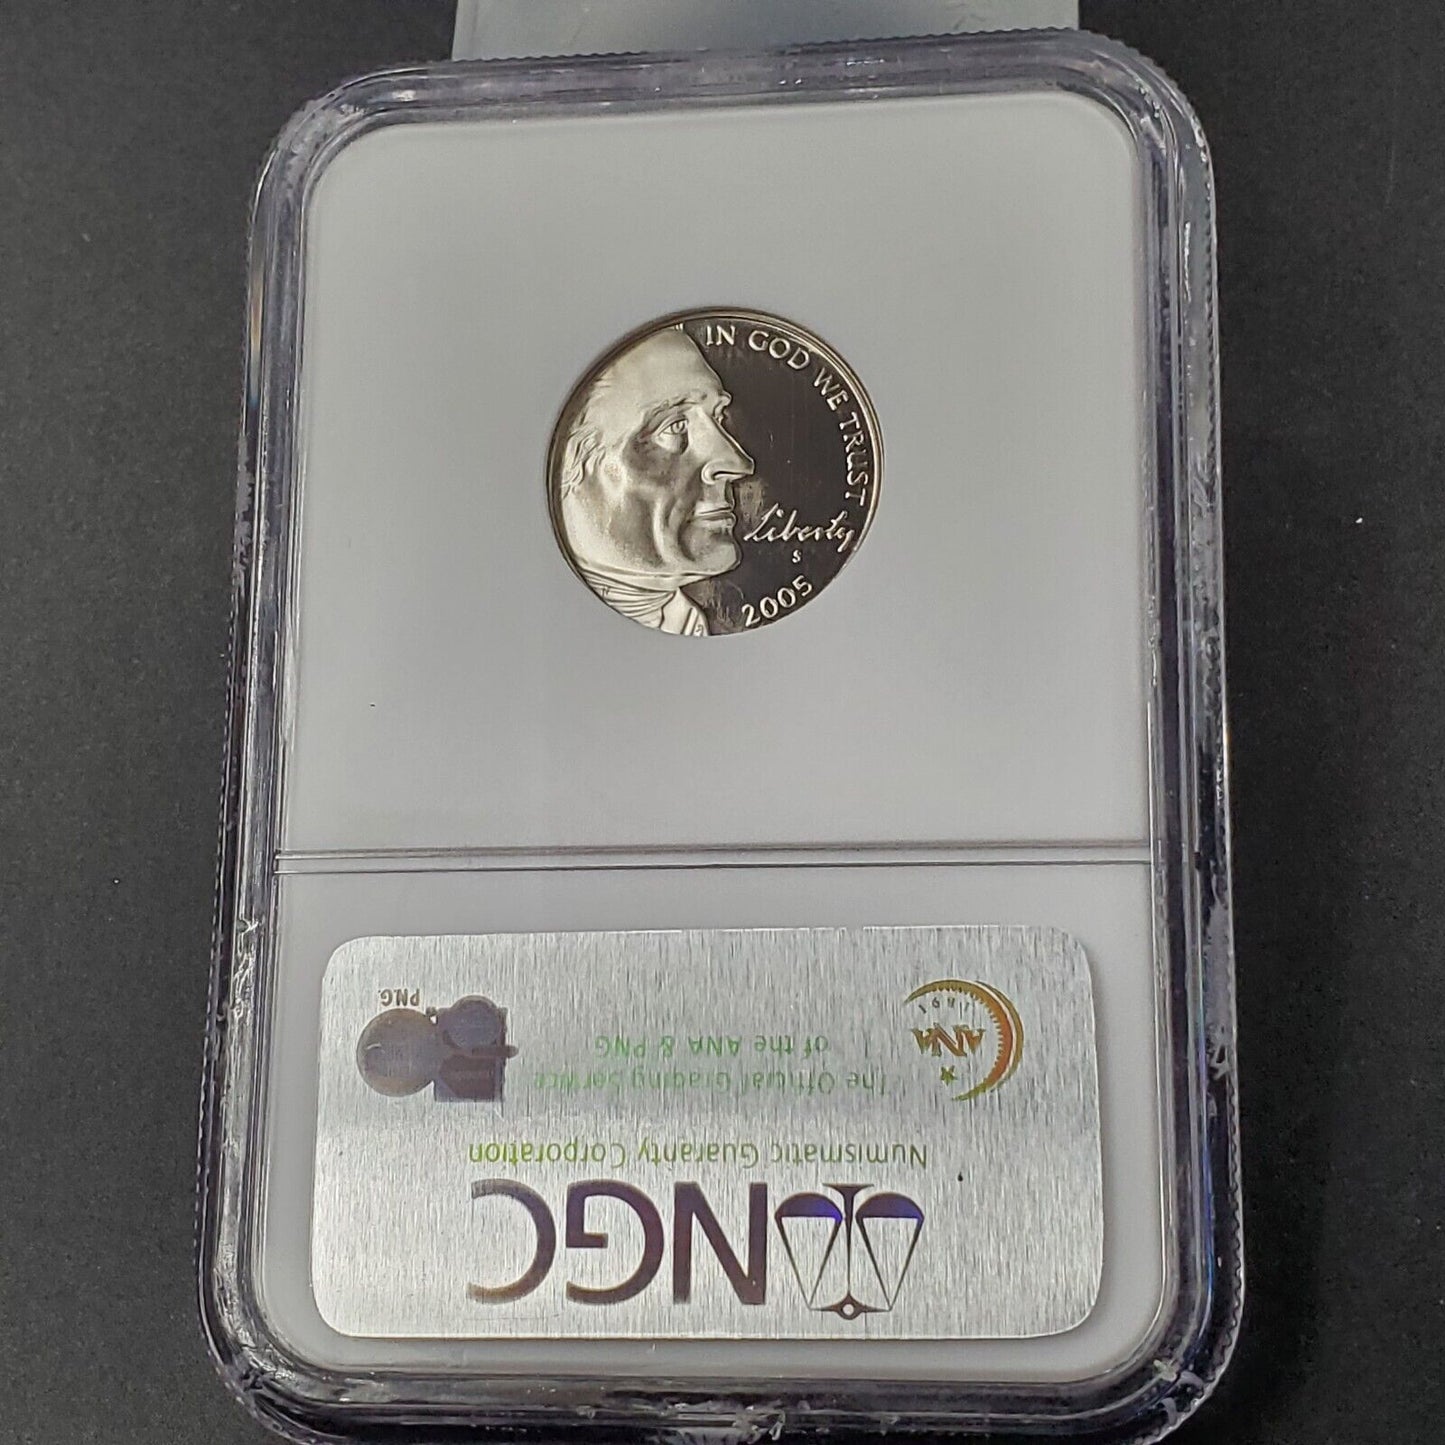 2005 S Bison Buffalo 5c Nickel Commemorative NGC PF69 Ultra Cameo #006